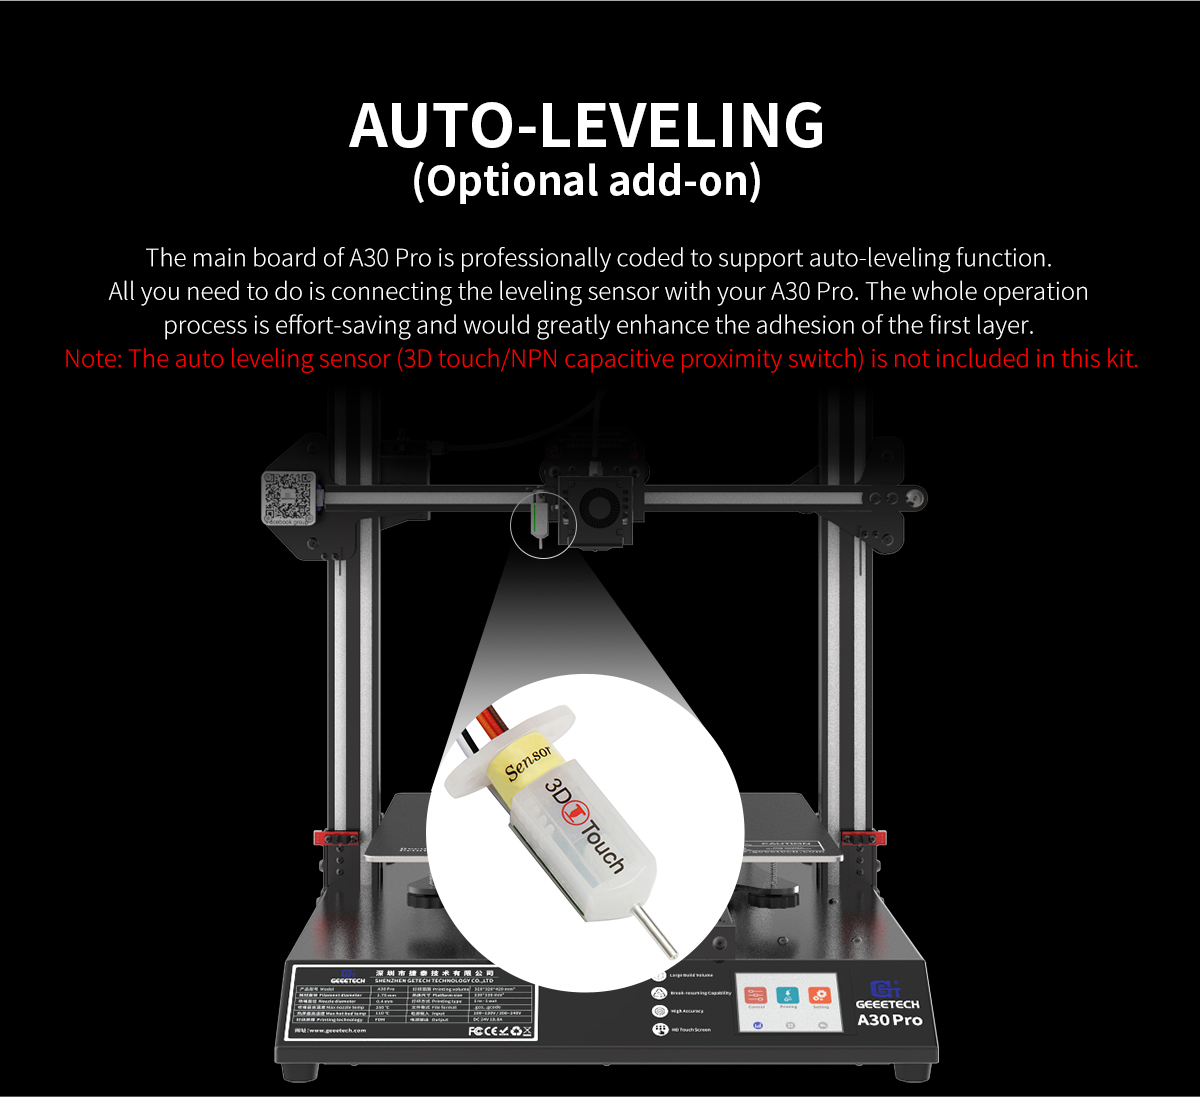 Geeetech A30Pro description of auto-leveling